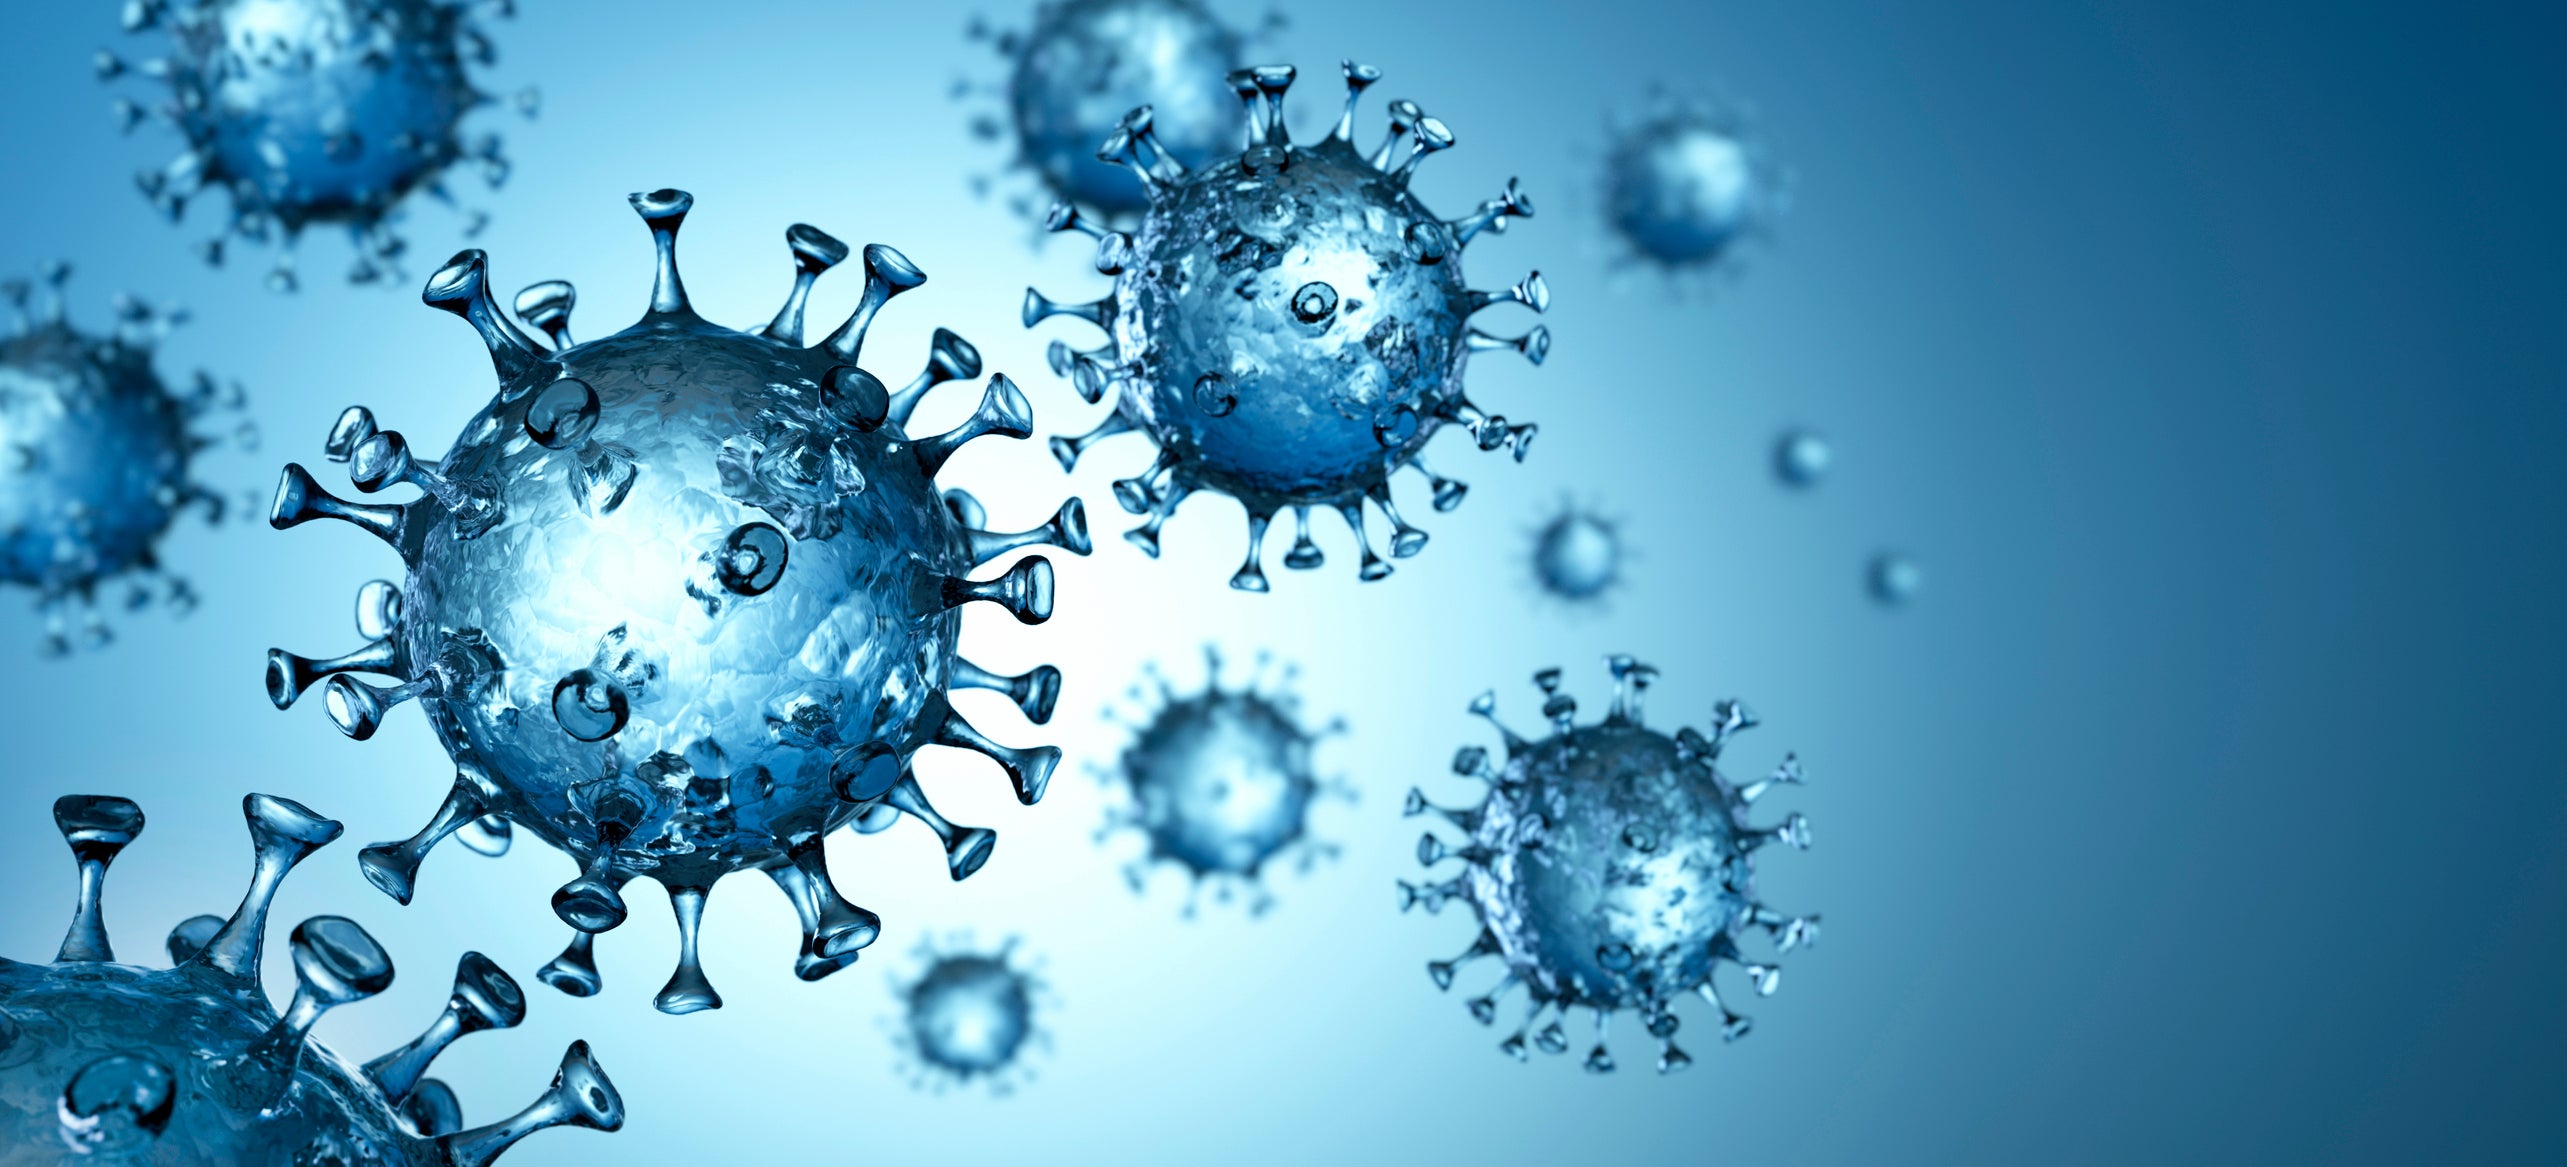 Group of floating coronaviruses with blue background.